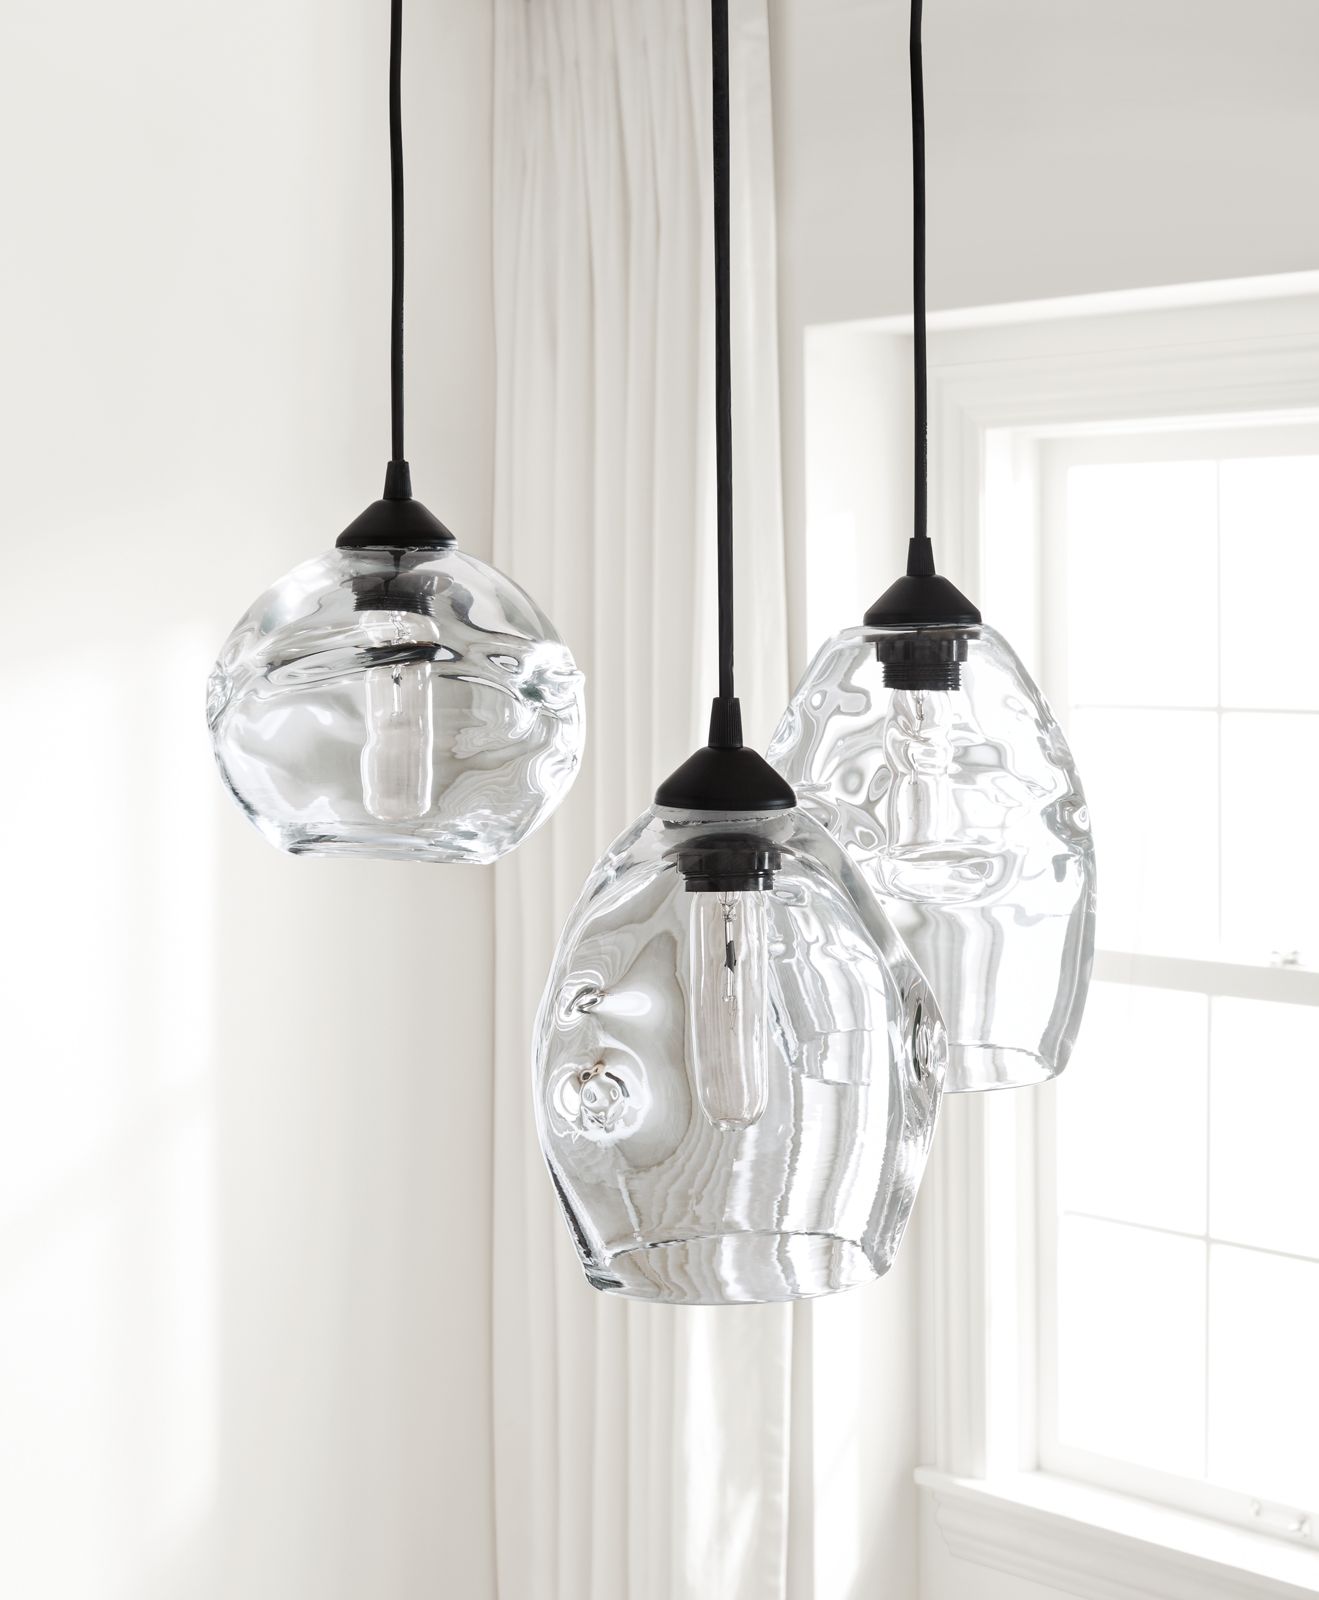 Set of three glass pendant lights.